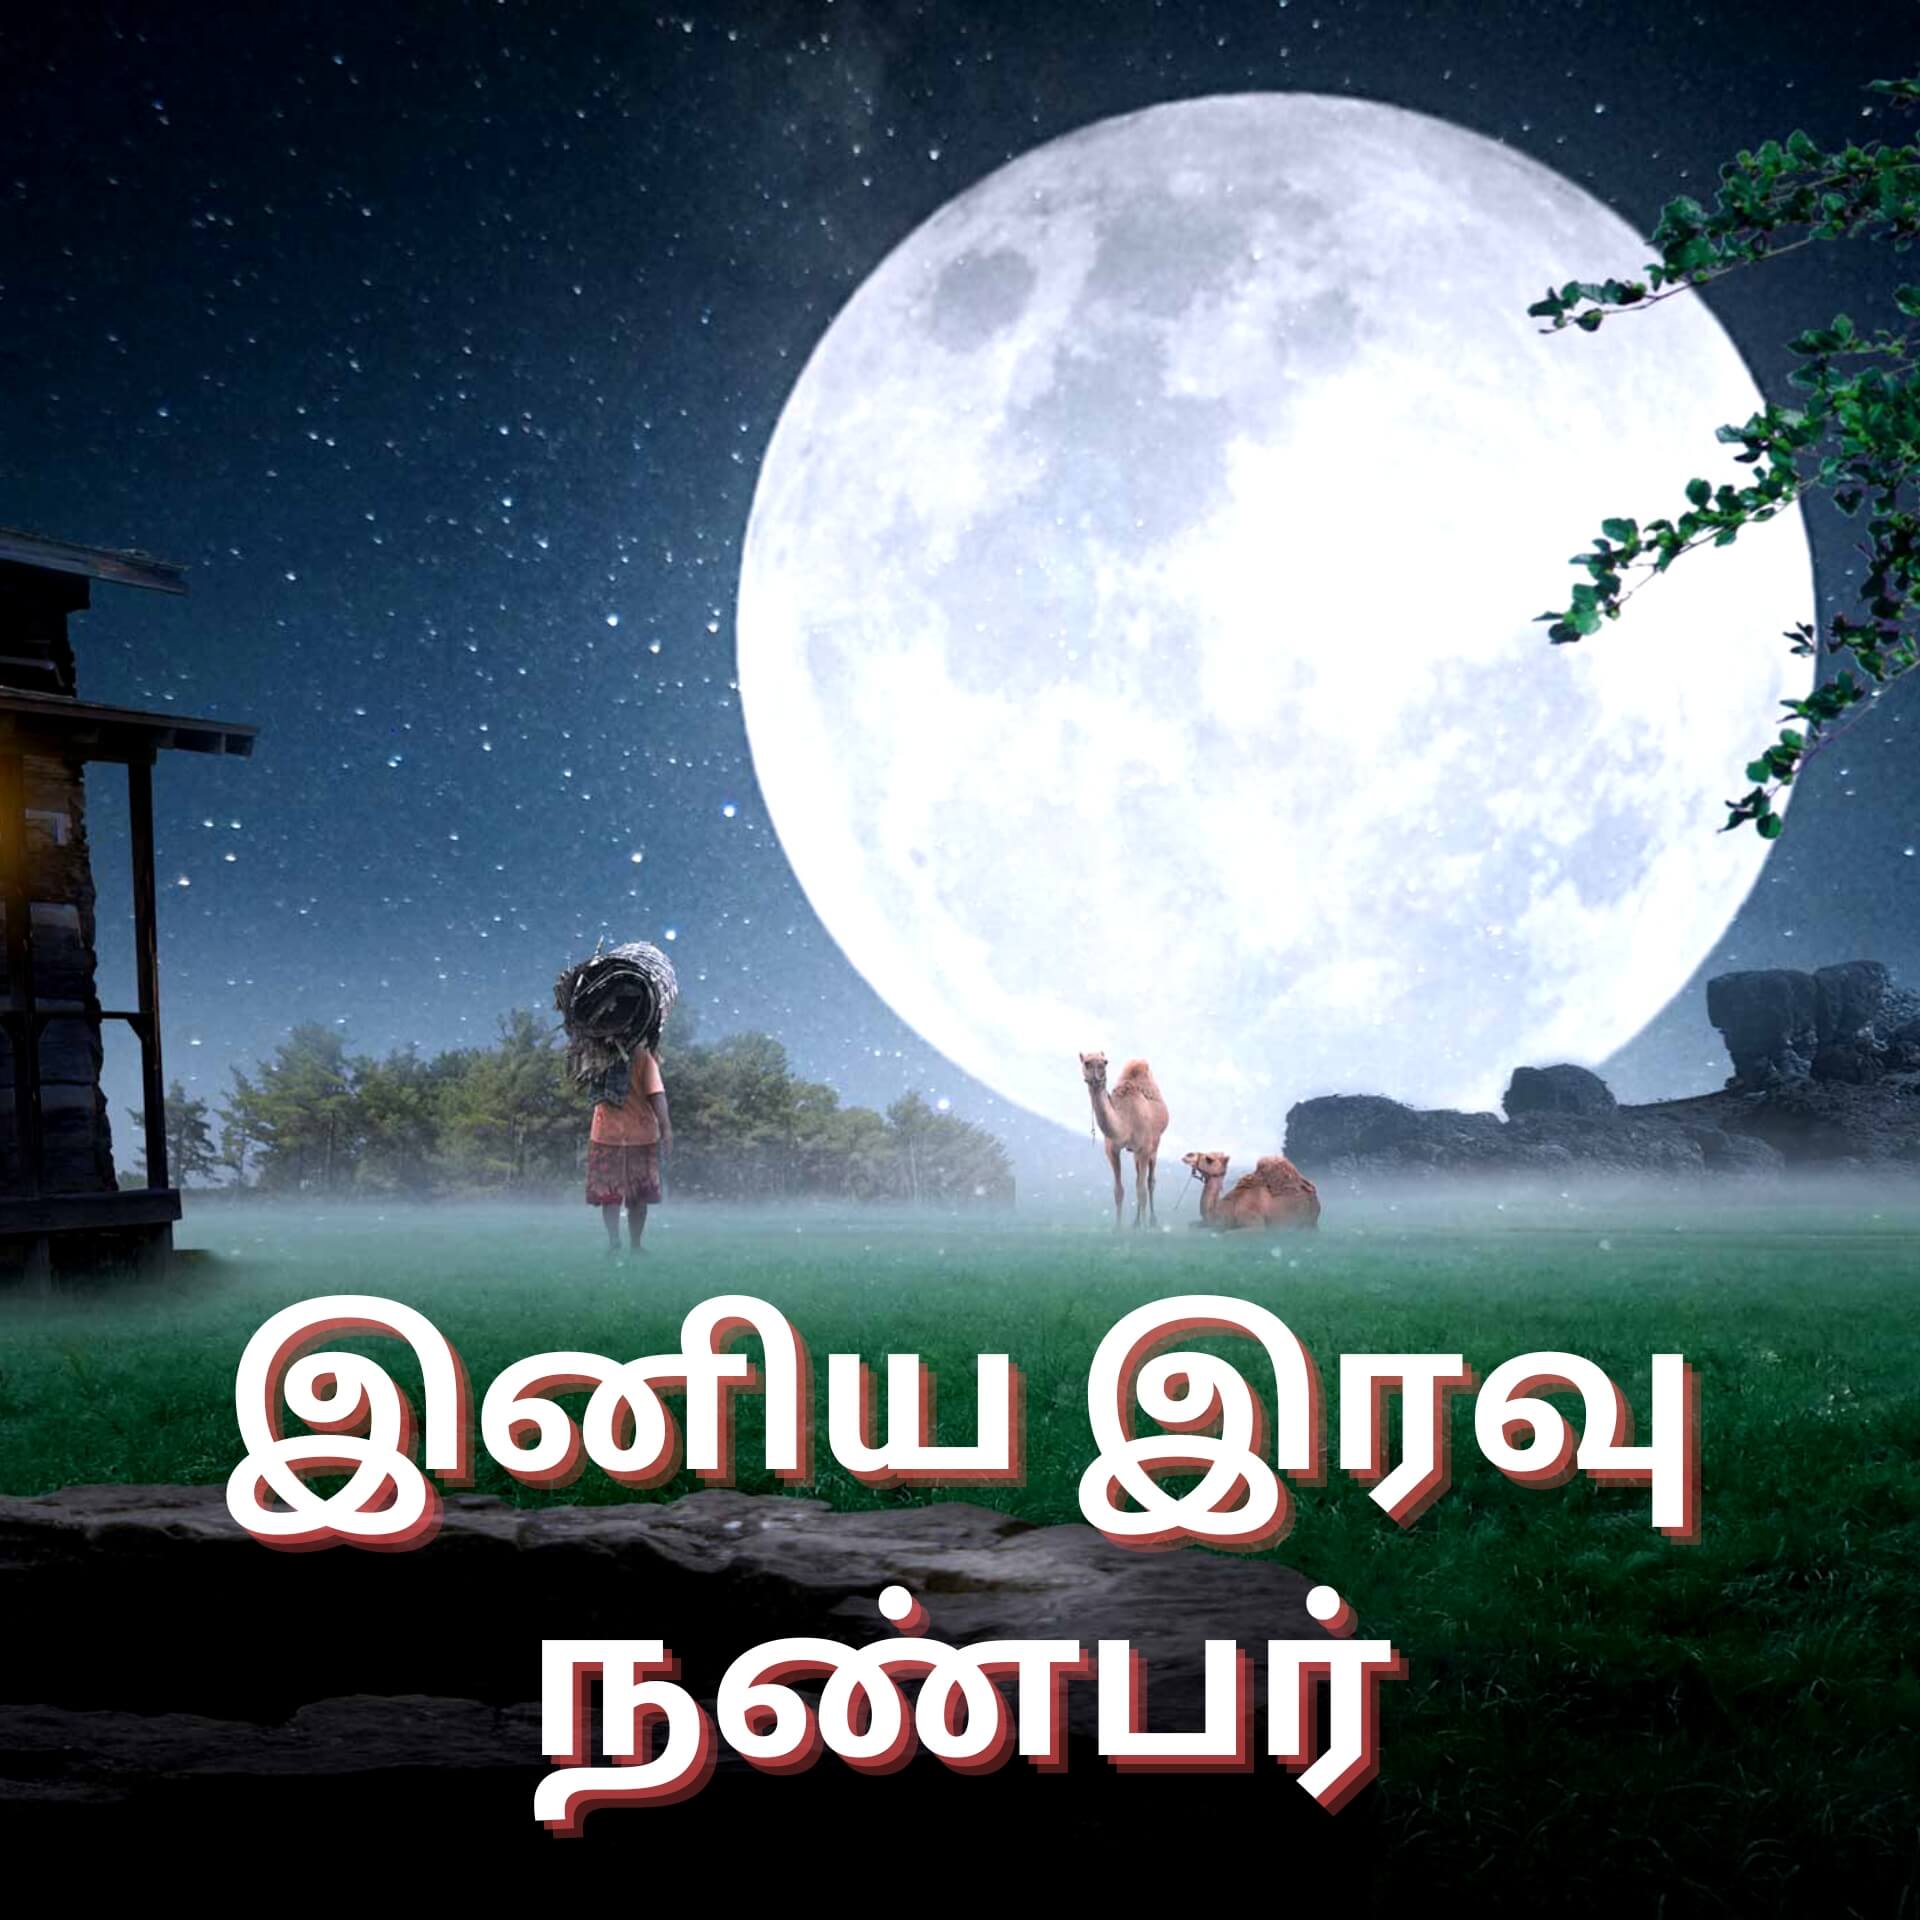 Tamil Good Night Pics images Free Download